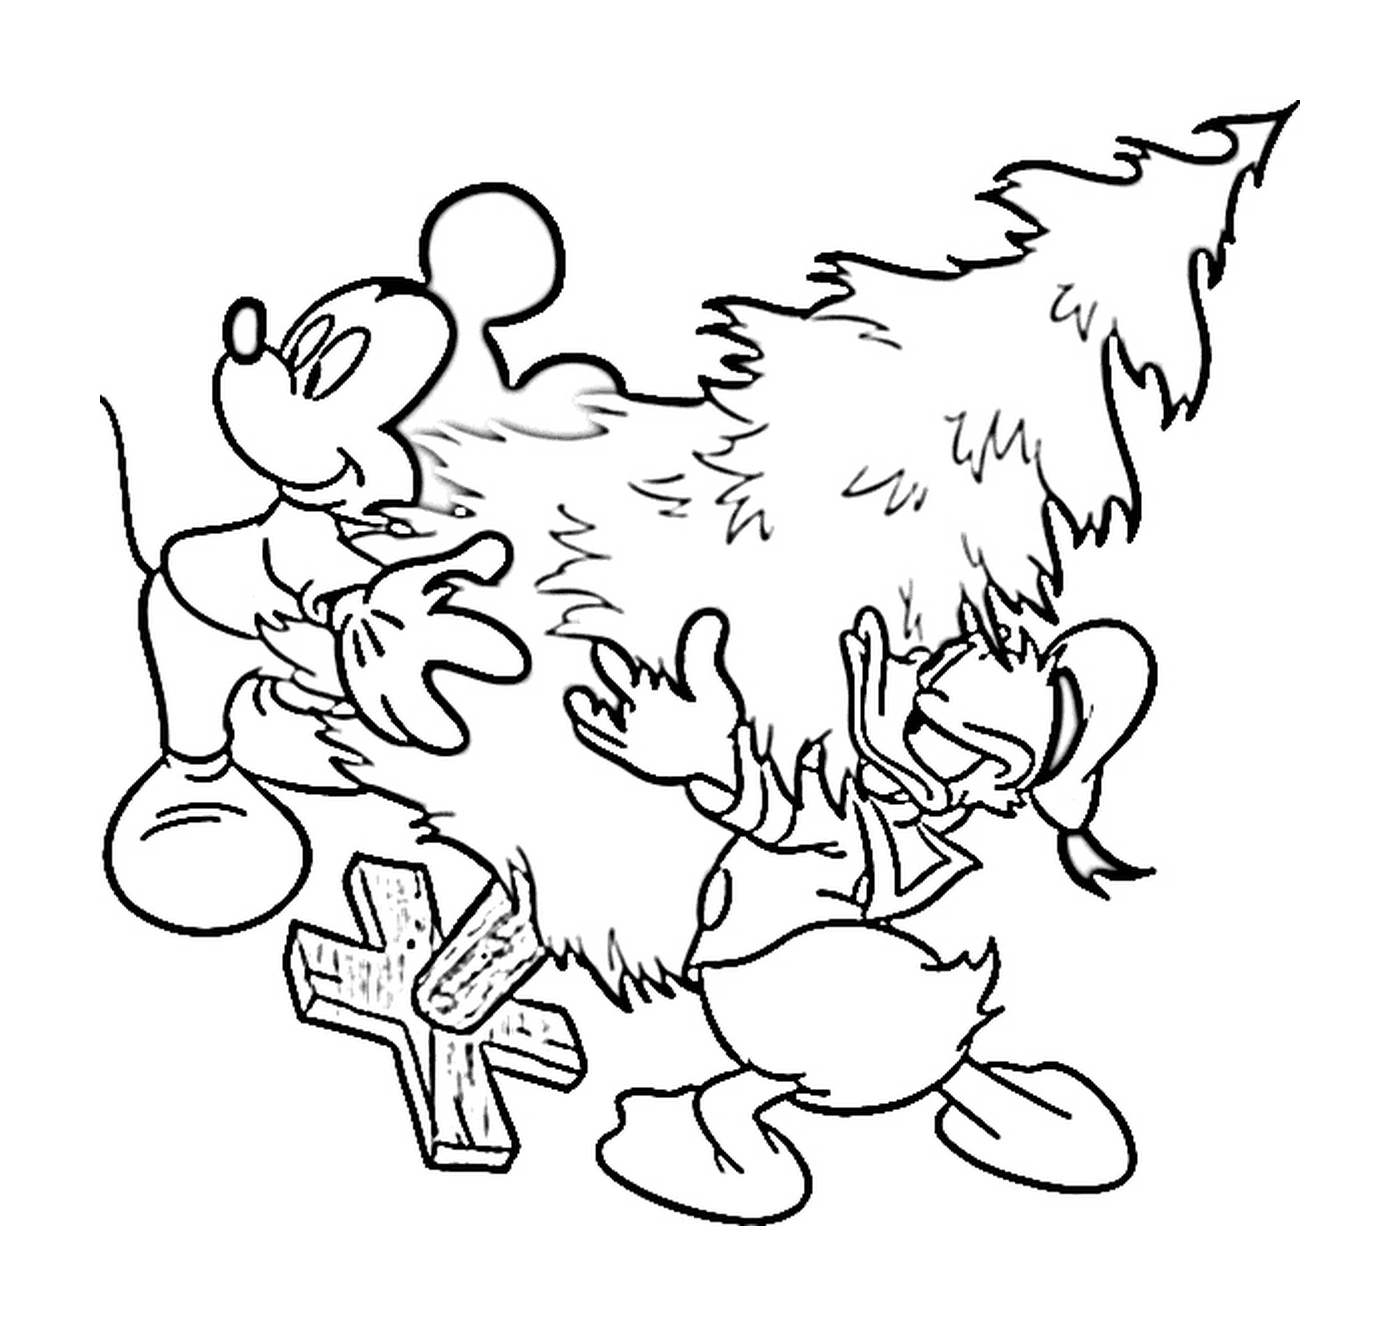  Caricatura del personaje de Goofy 